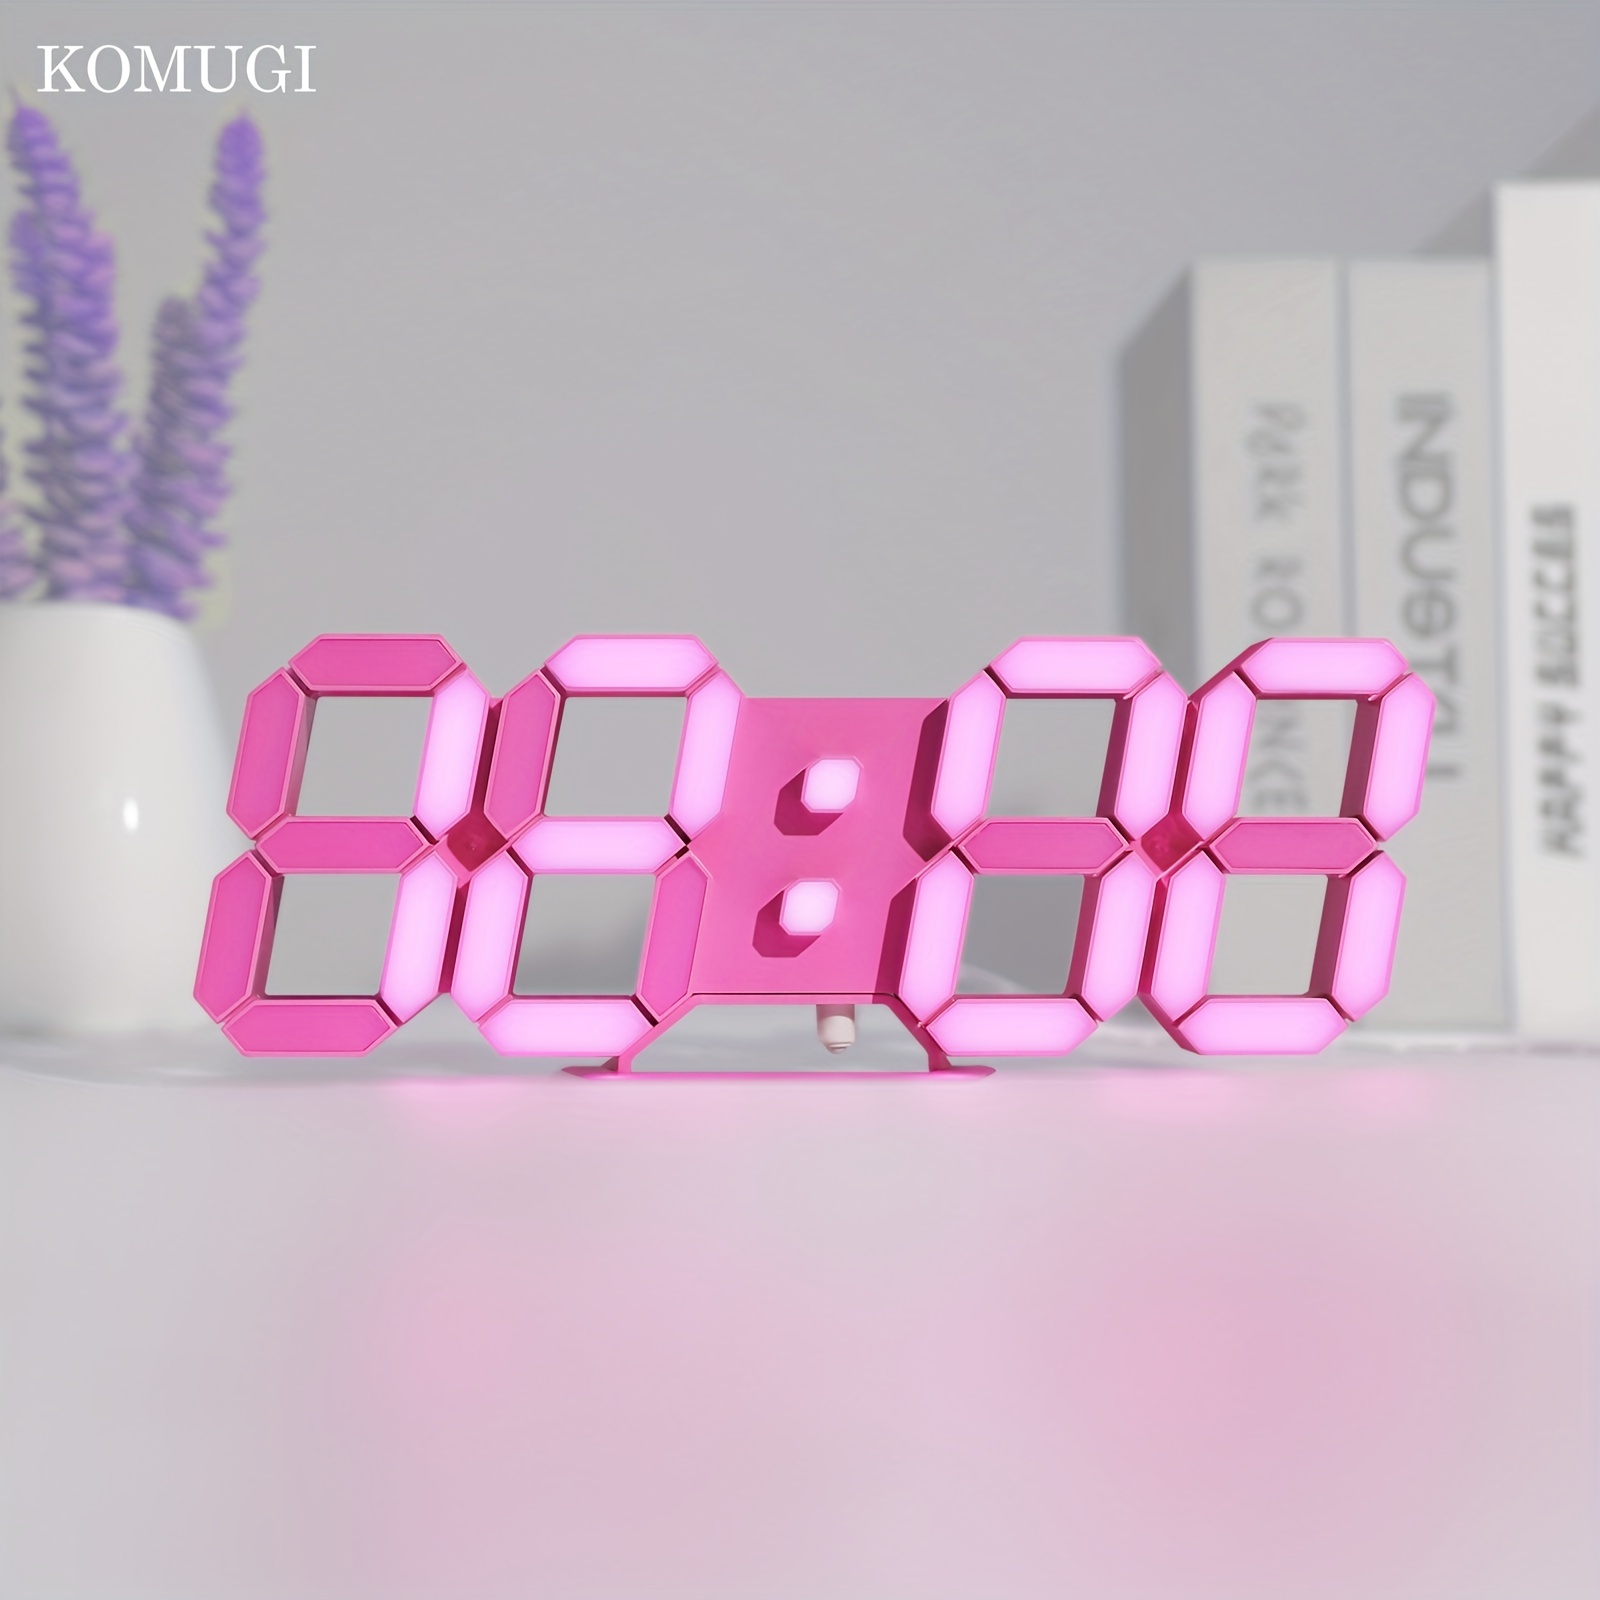 1pc Pink LED Clock For Room Decor, 9.7" Digital Wall Clock Table Clock For Living Room, Modern Digital Alarm Clock For Bedroom, Aesthetic Bedside Desk